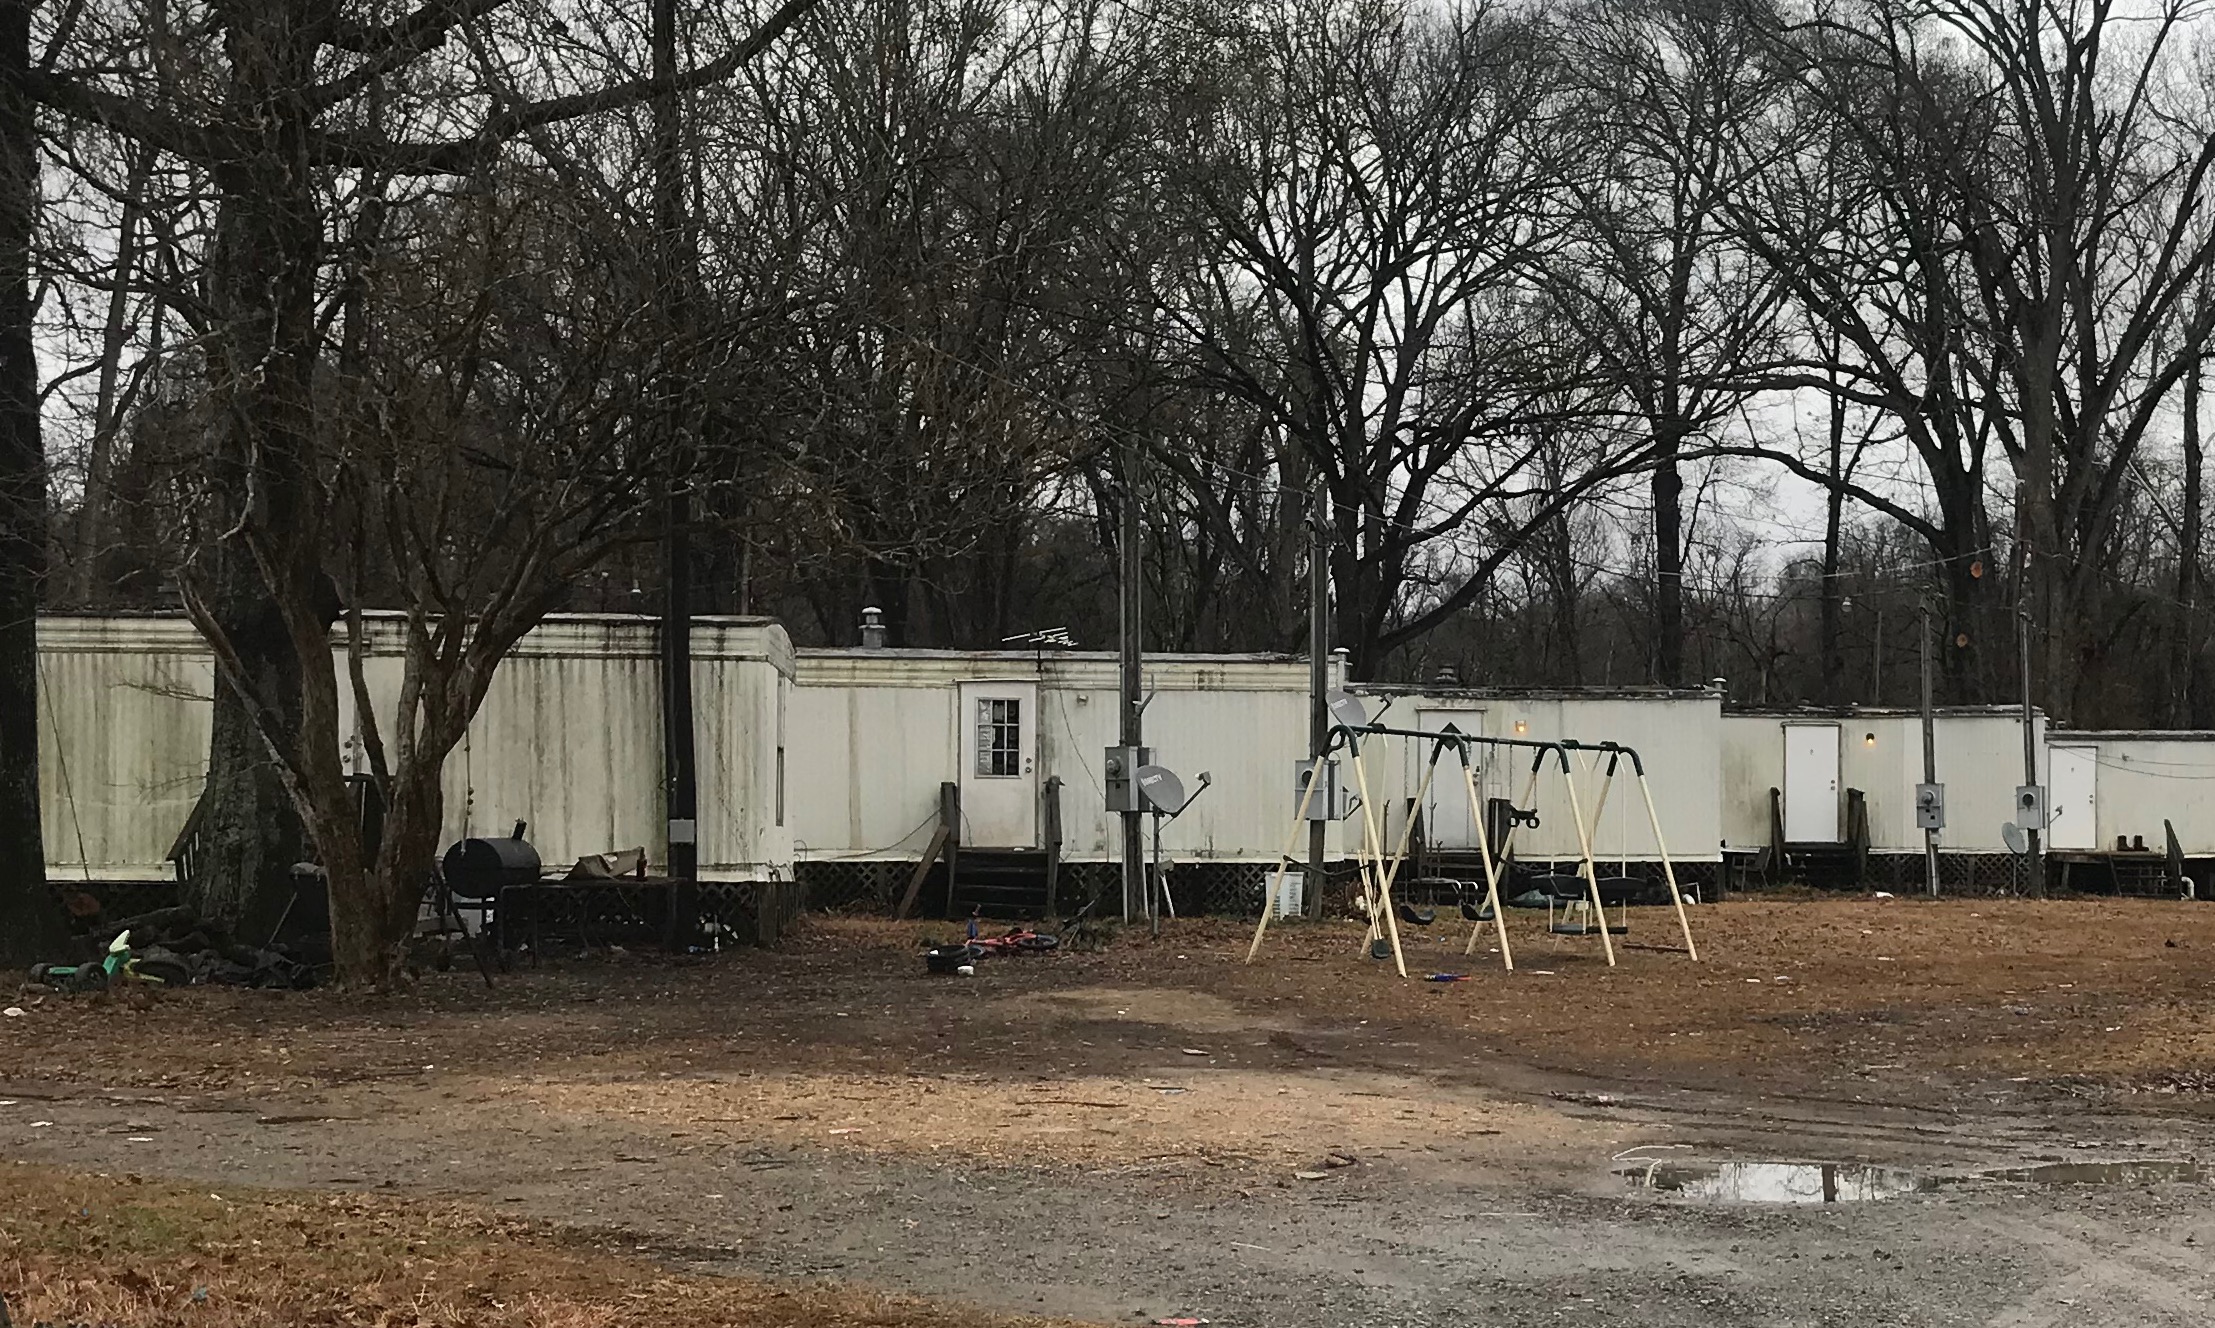  A trailer park on the outskirts of Vicksburg, Mississippi. 